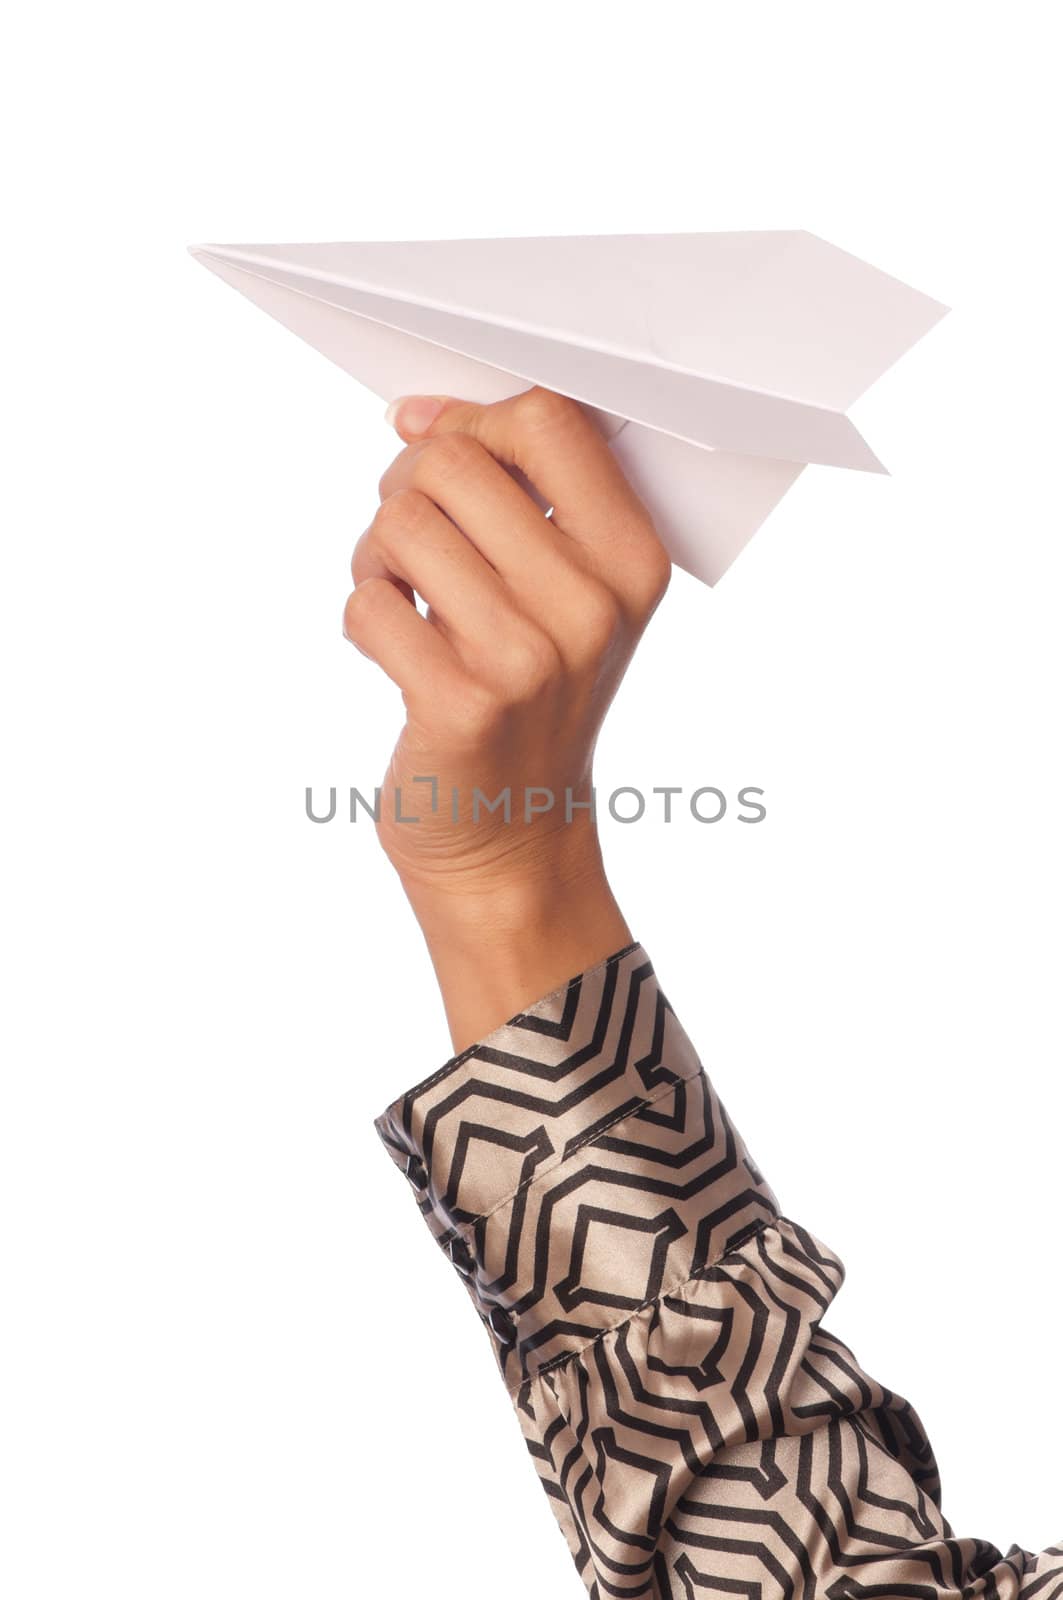 Businesswoman throwing white paper plane on the break